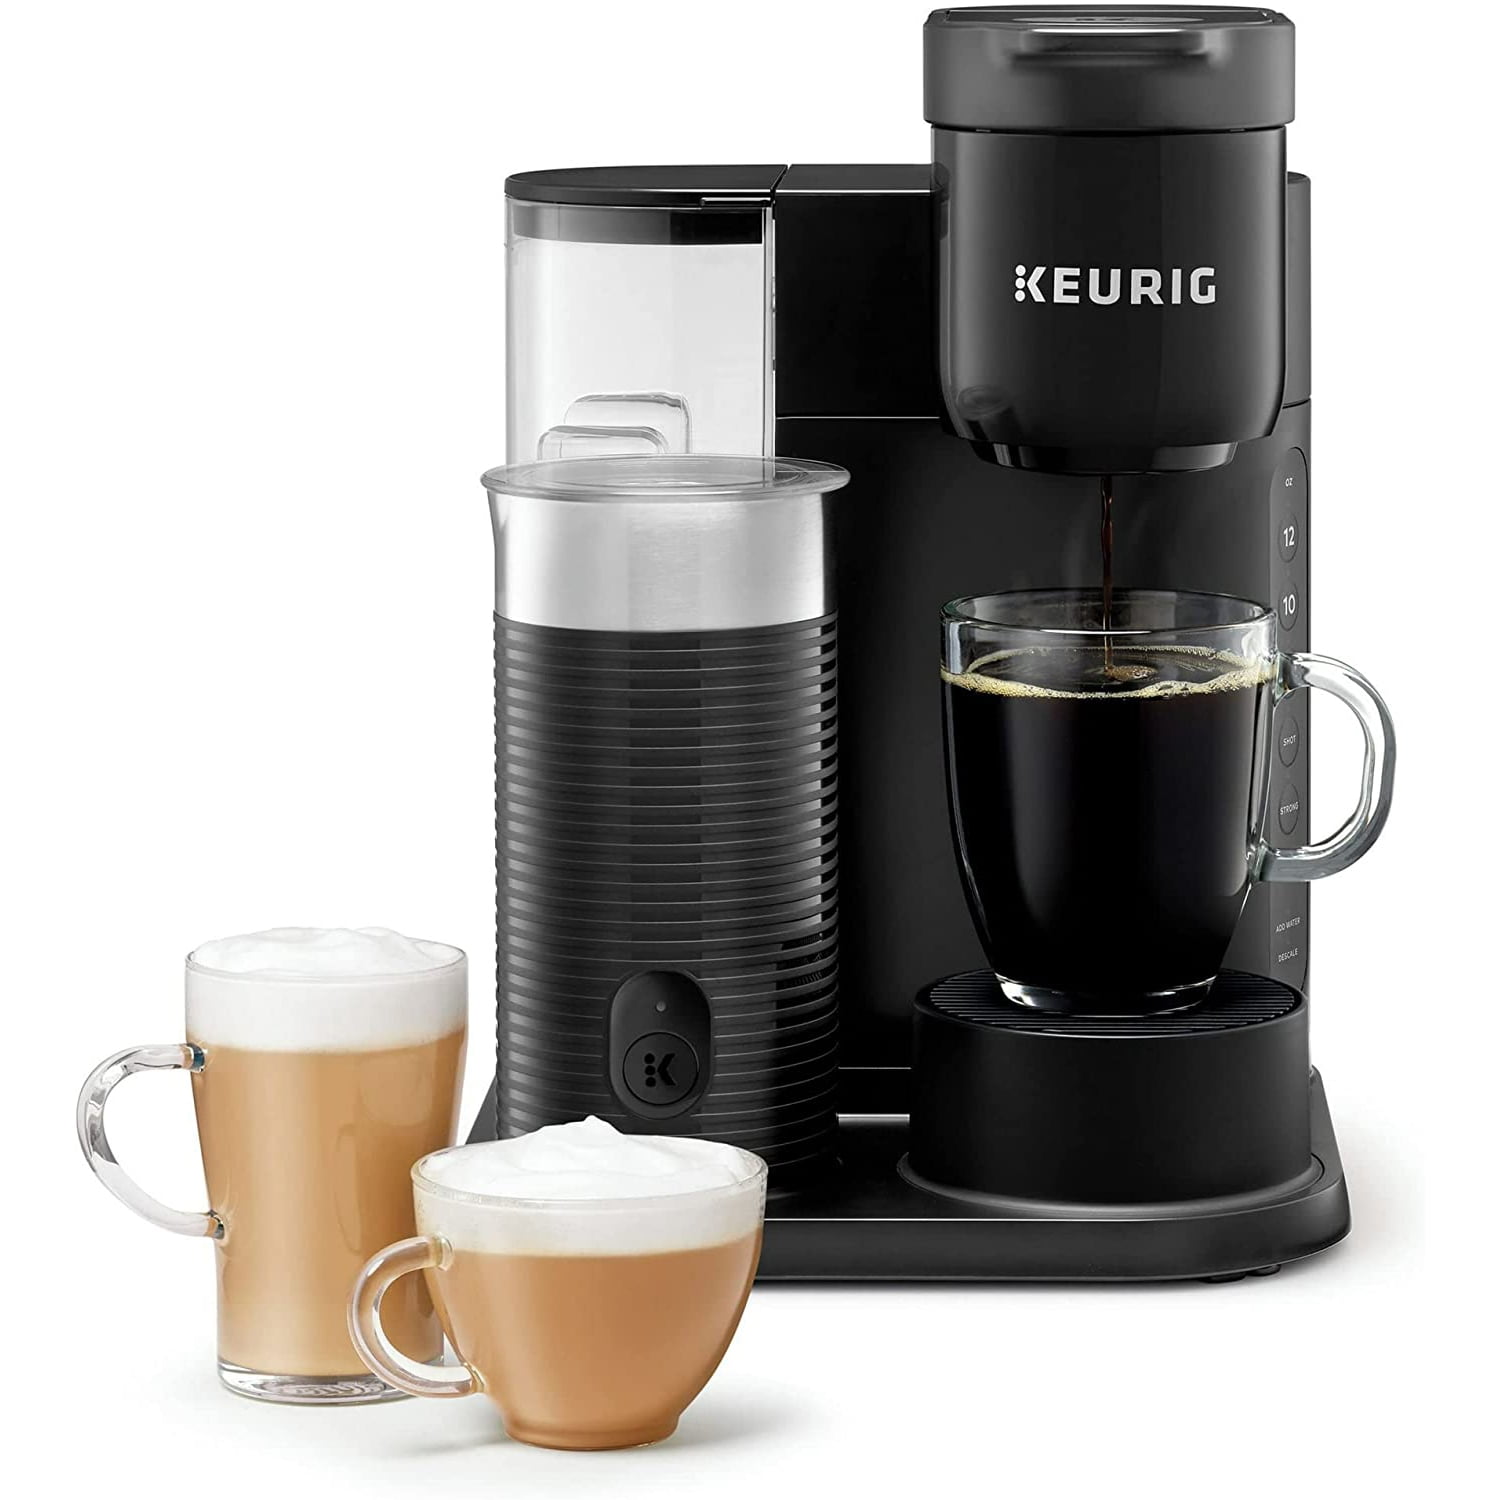 Keurig K Cafe Smart Brewer, Single-serve Coffee Makers